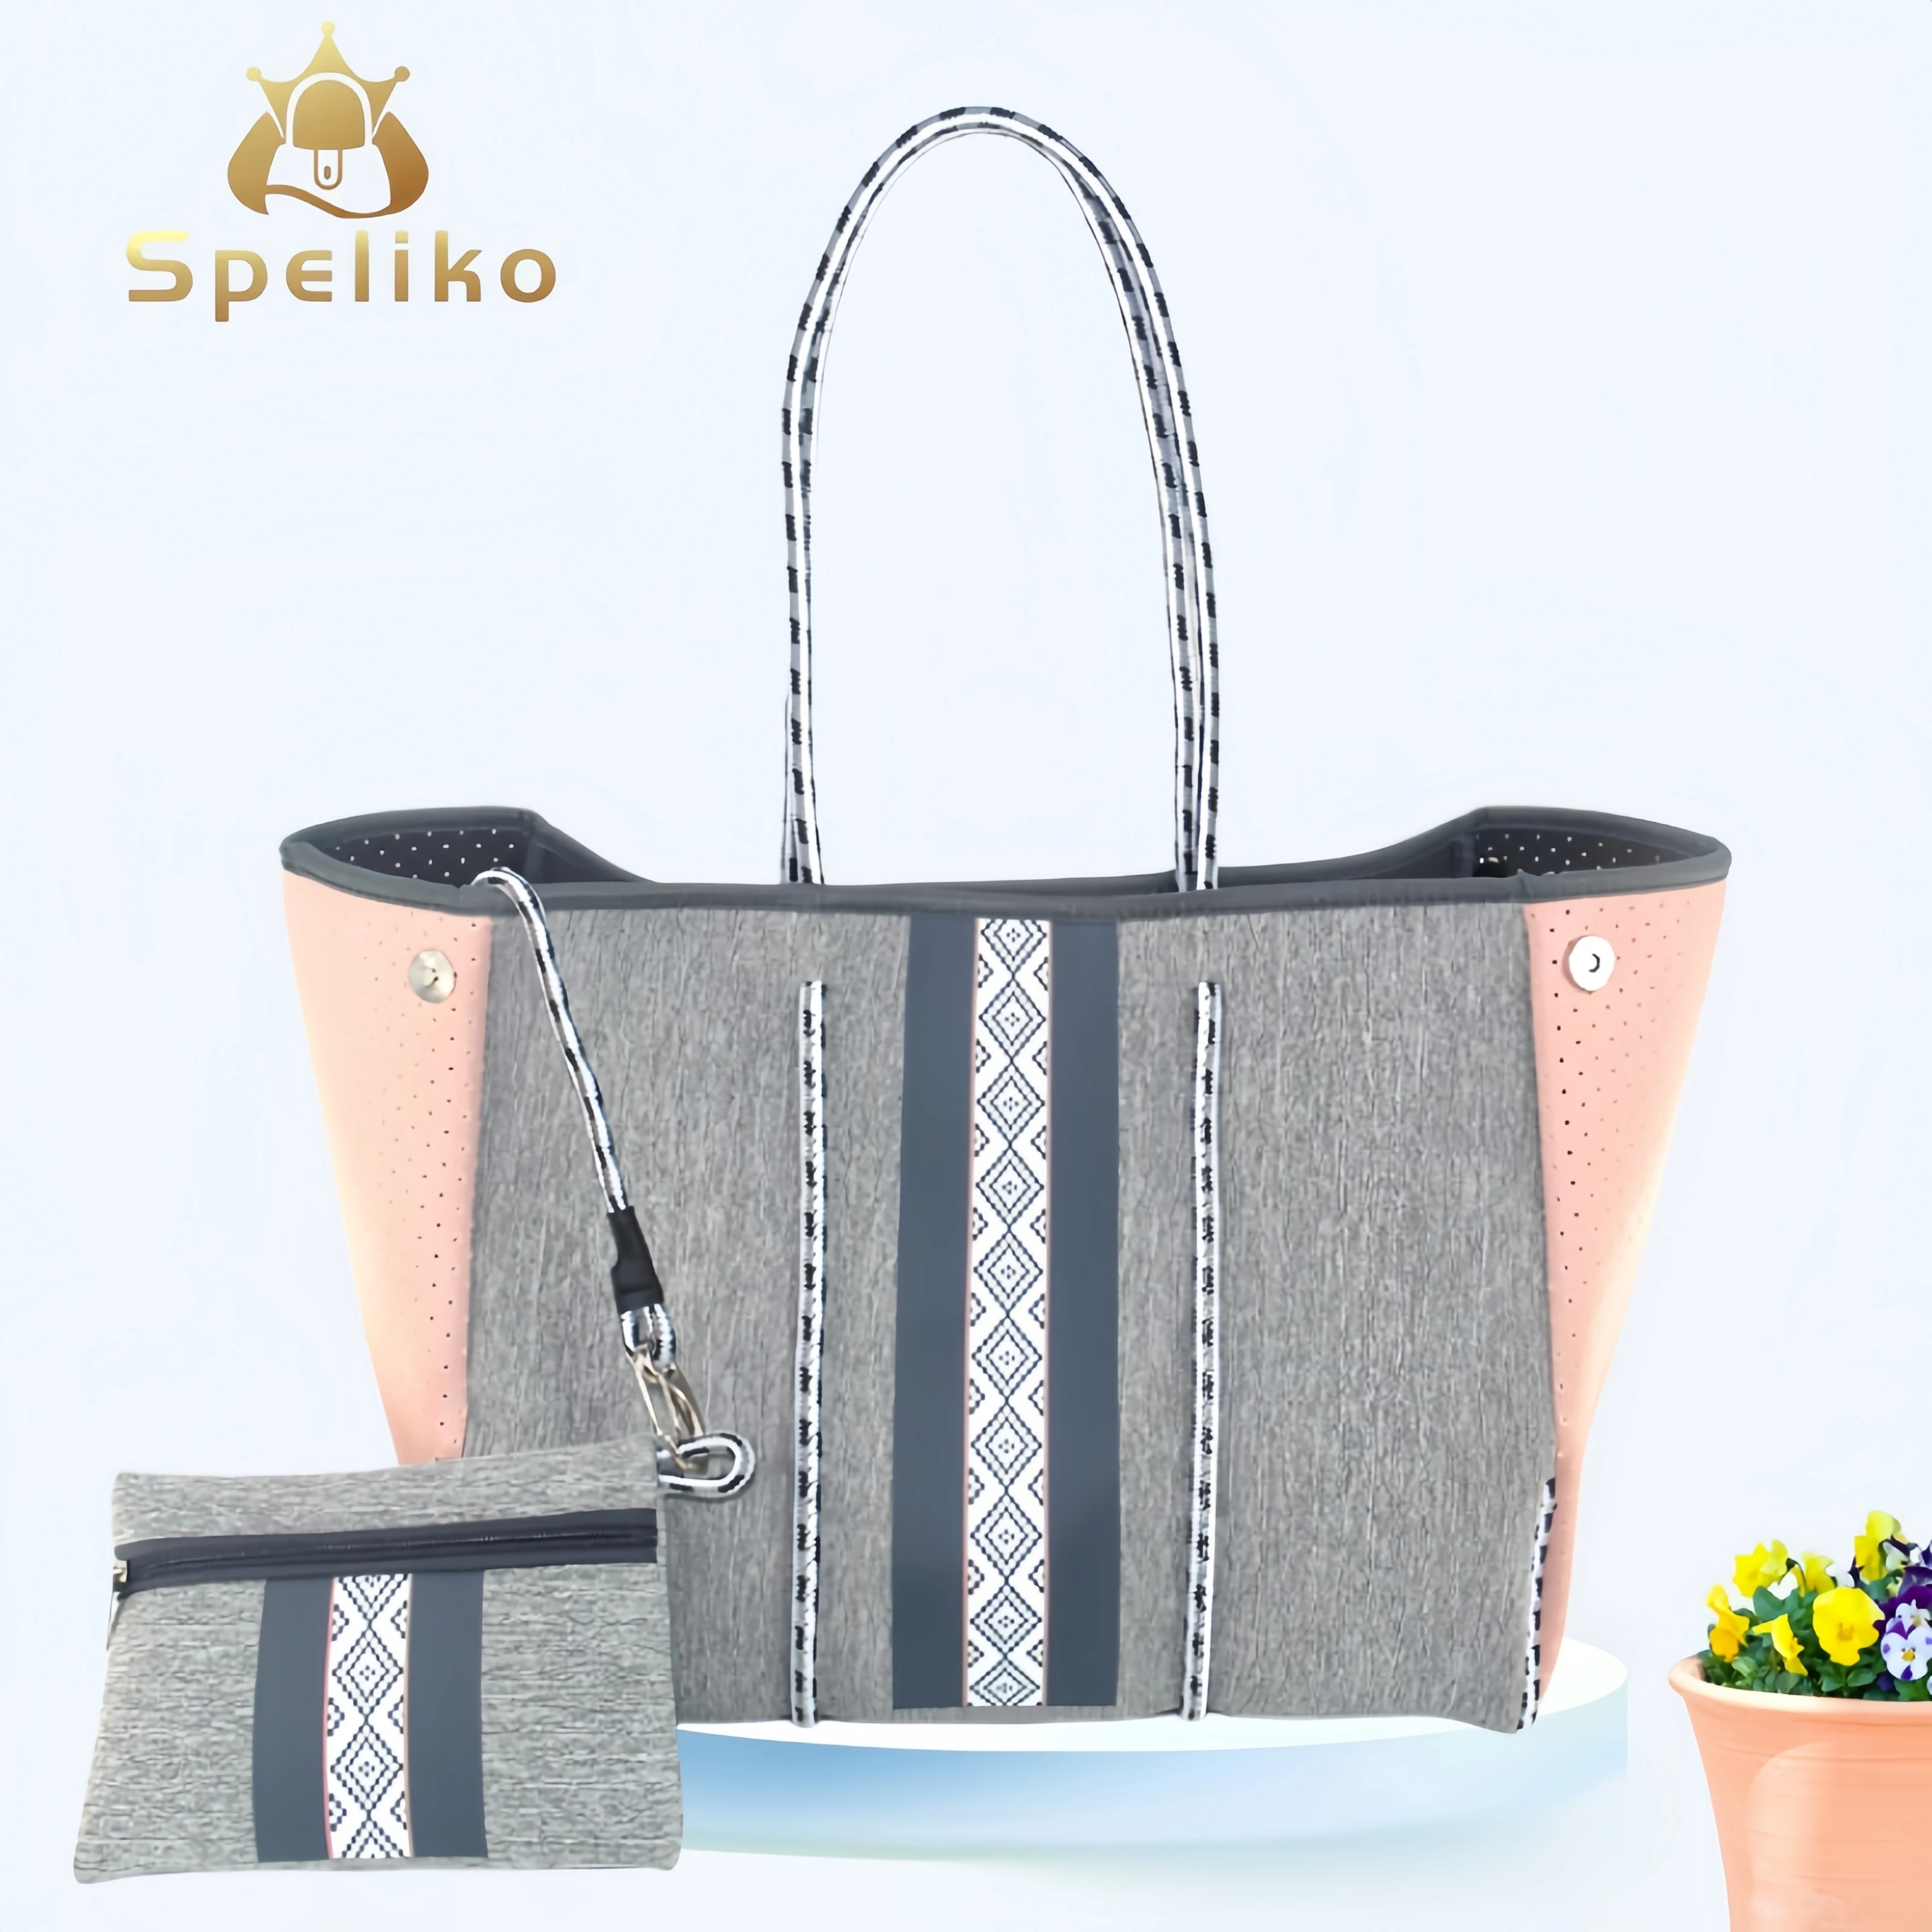 

In Stock Perforated Neoprene Bags Fashion Purses And Handbags Ladies Cosmetic Bags Beach Neoprene Tote bag